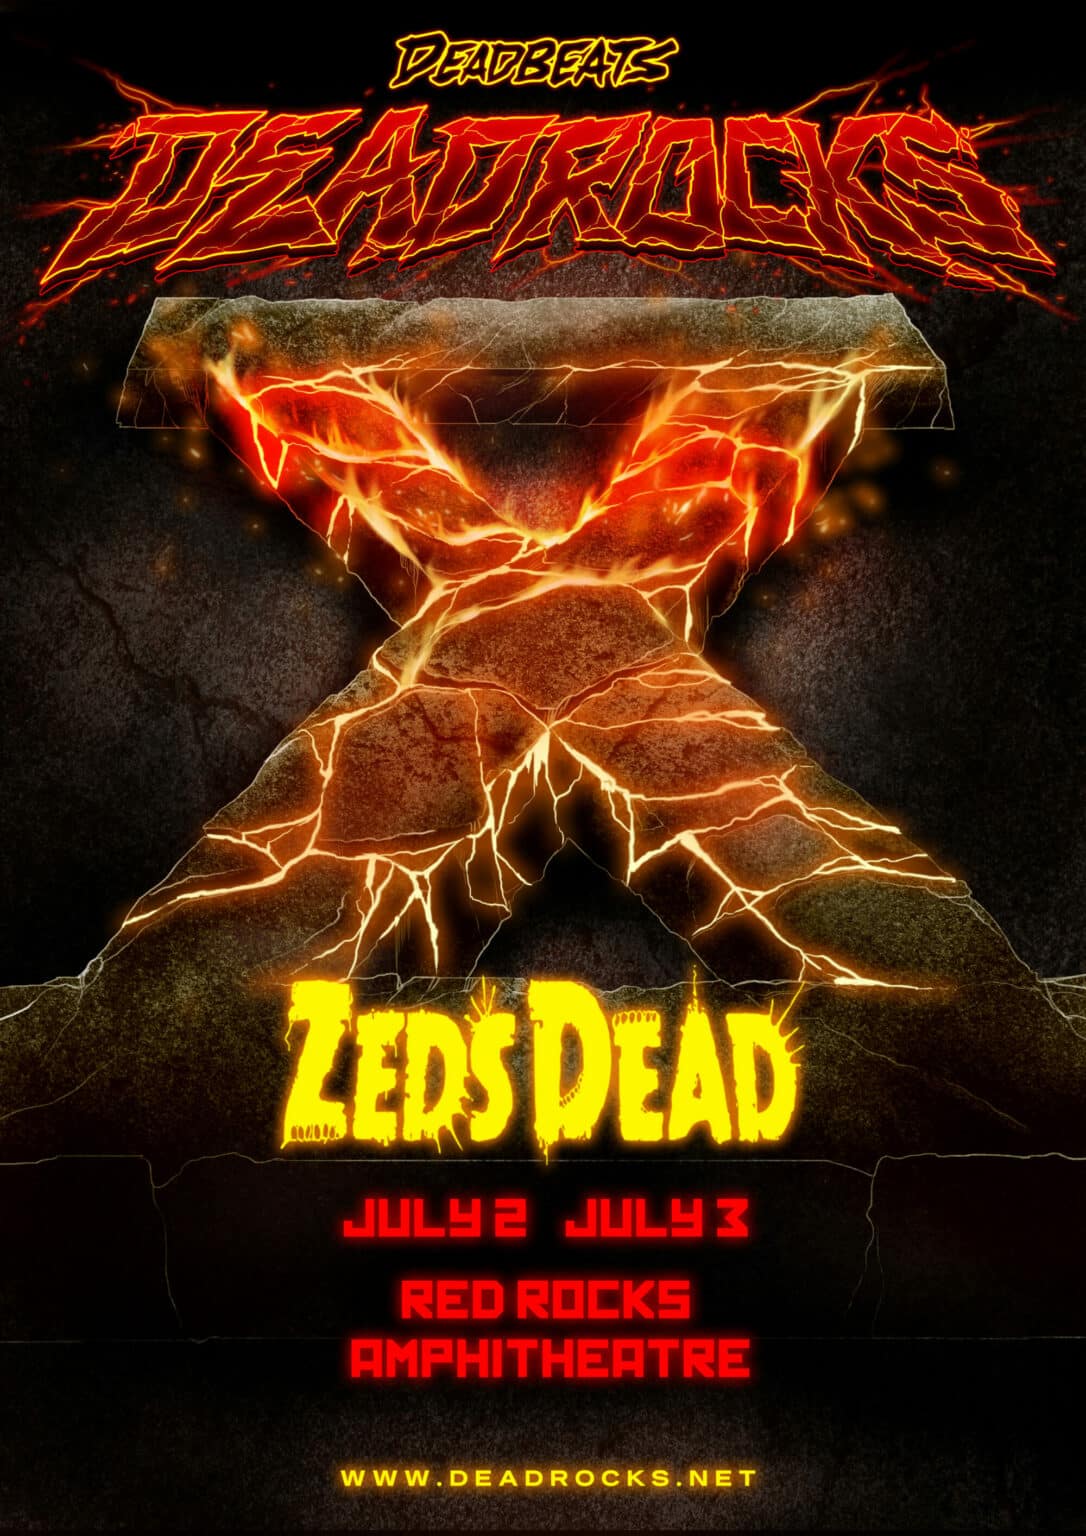 Zeds Dead Announce 10th Annual Deadrocks at Red Rocks Amphitheatre